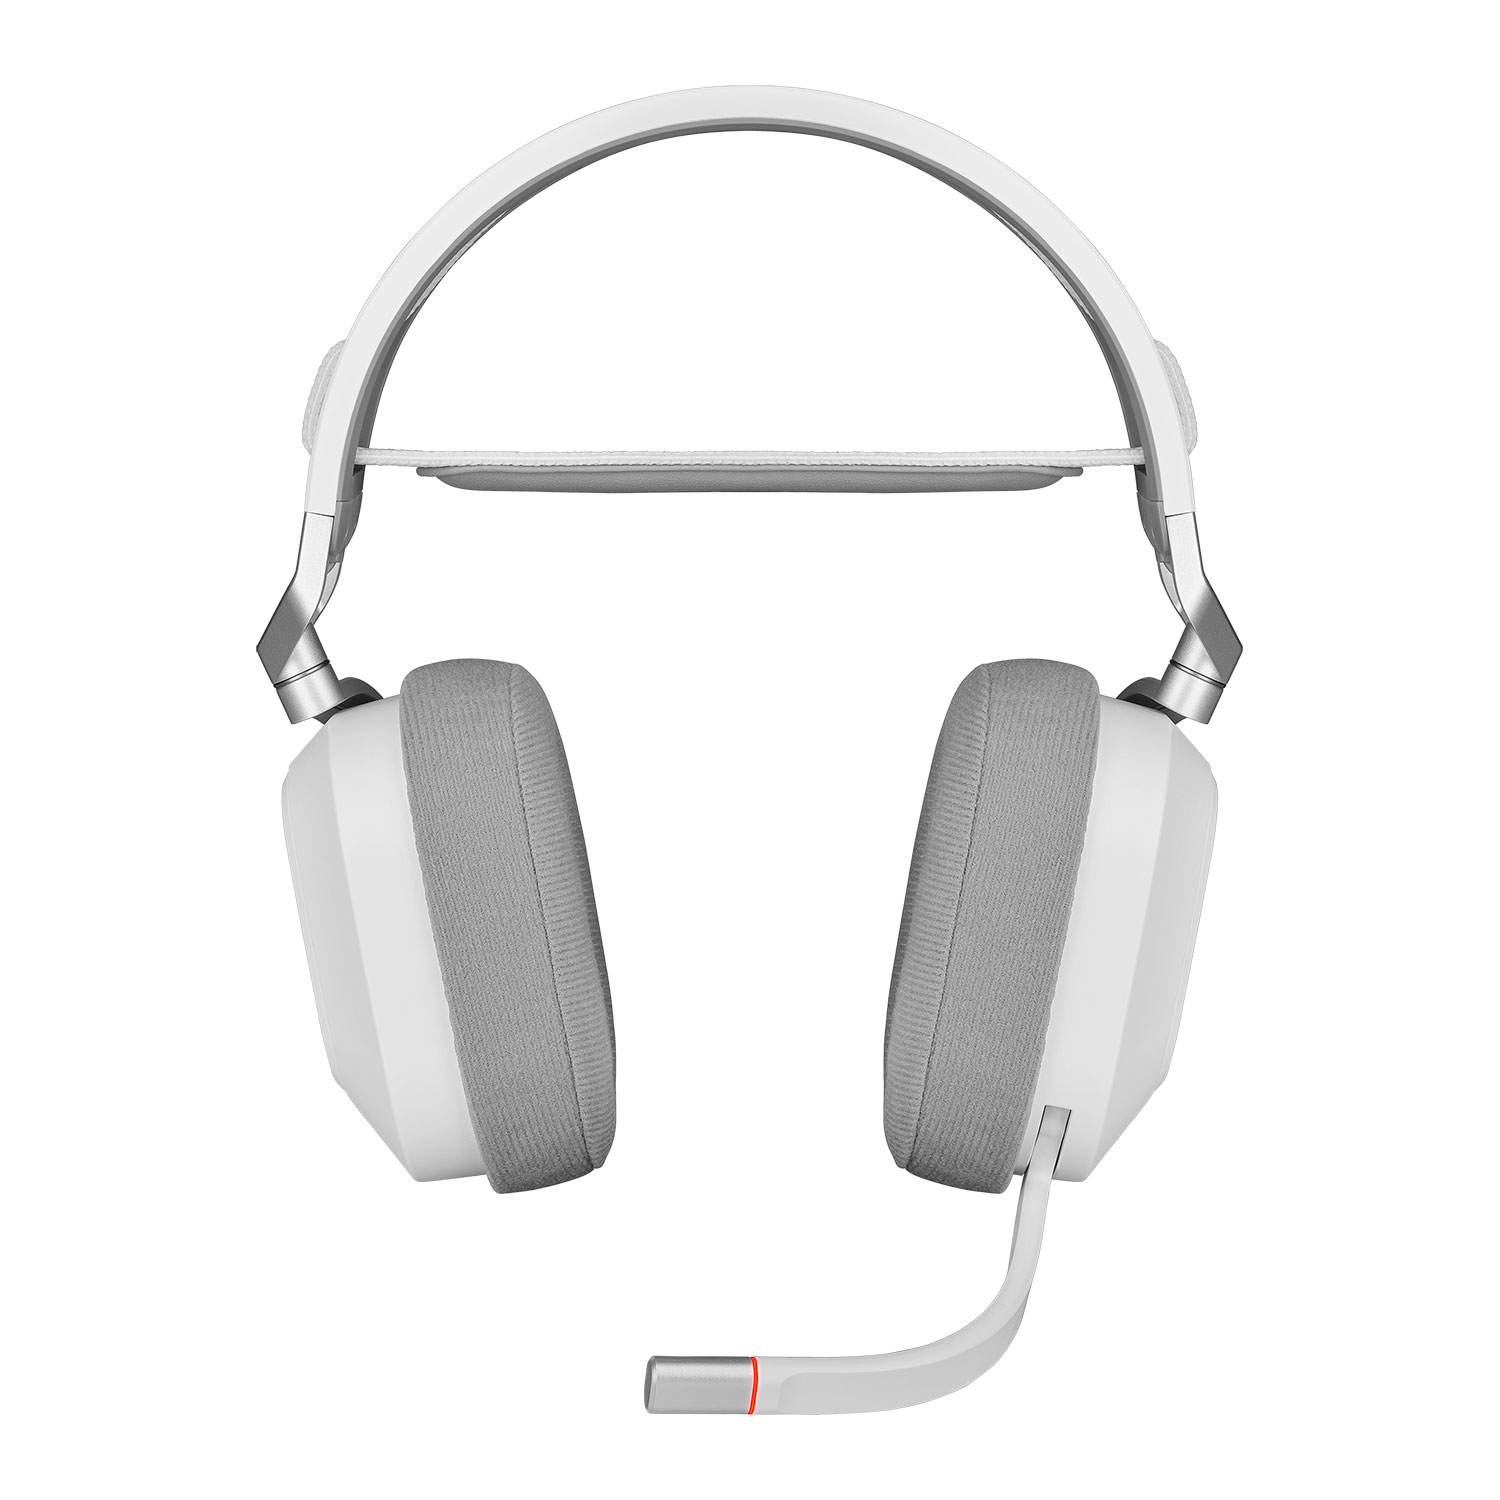 Corsair CA-9011238-AP HS80 RGB USB Wired Premium White Gaming Headset